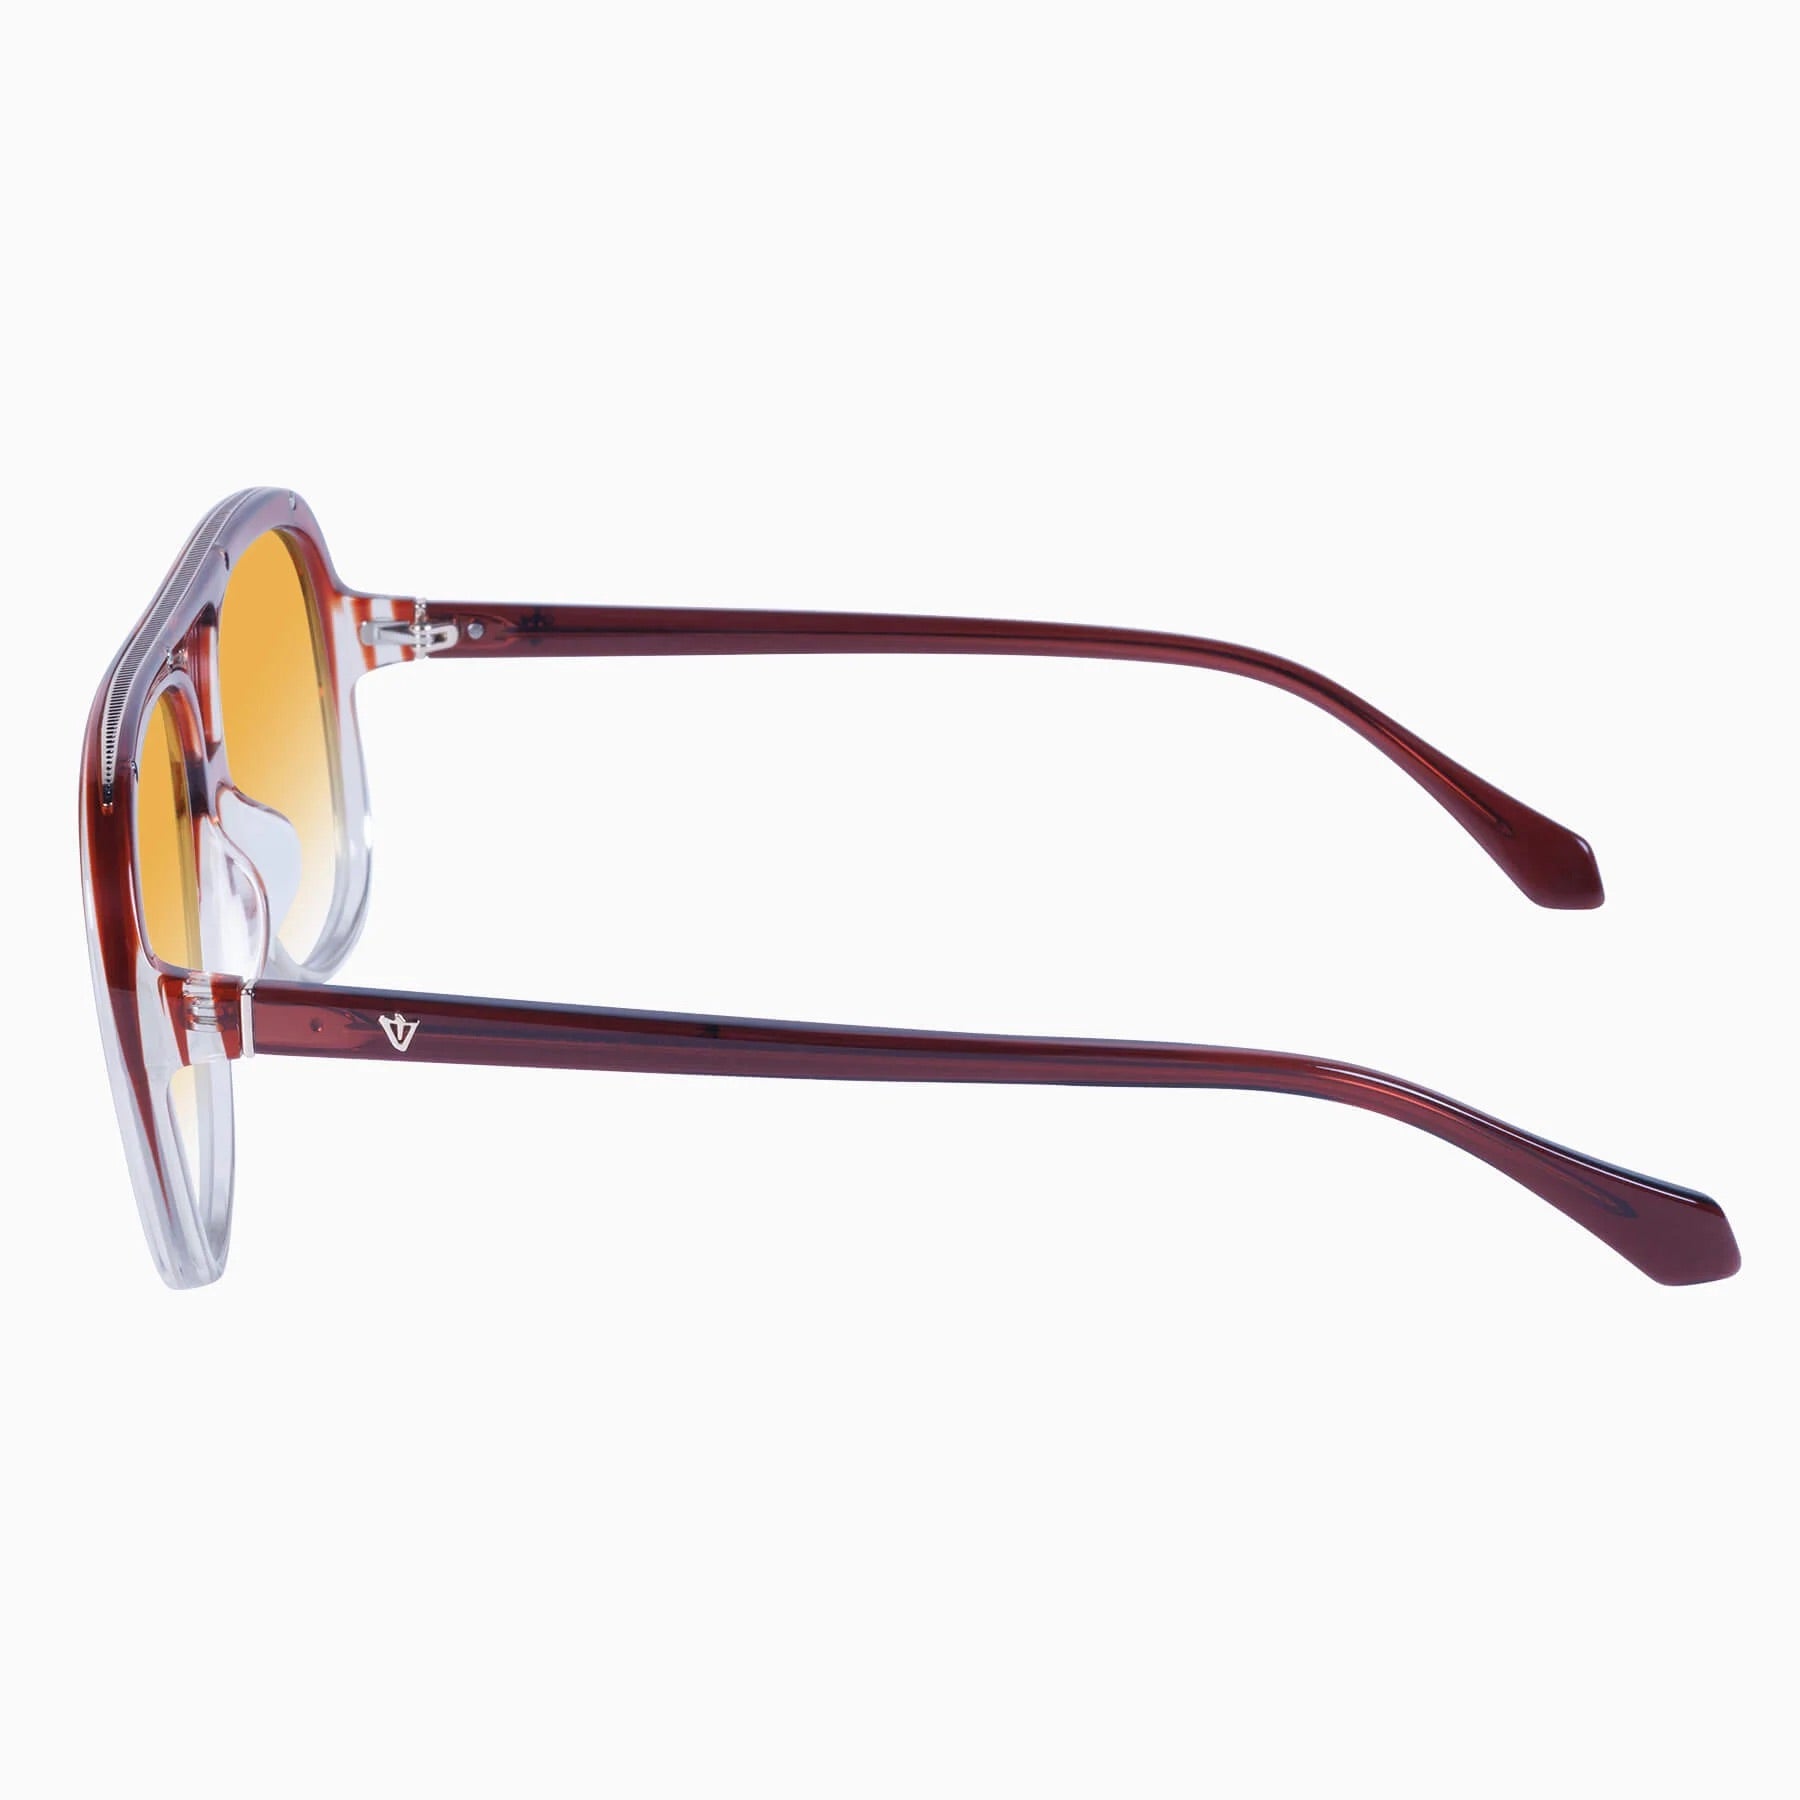 Bang | Sunglasses - Burnt Orange Fade To Crystal w. Gold Metal Trim / Orange Gradient Lens